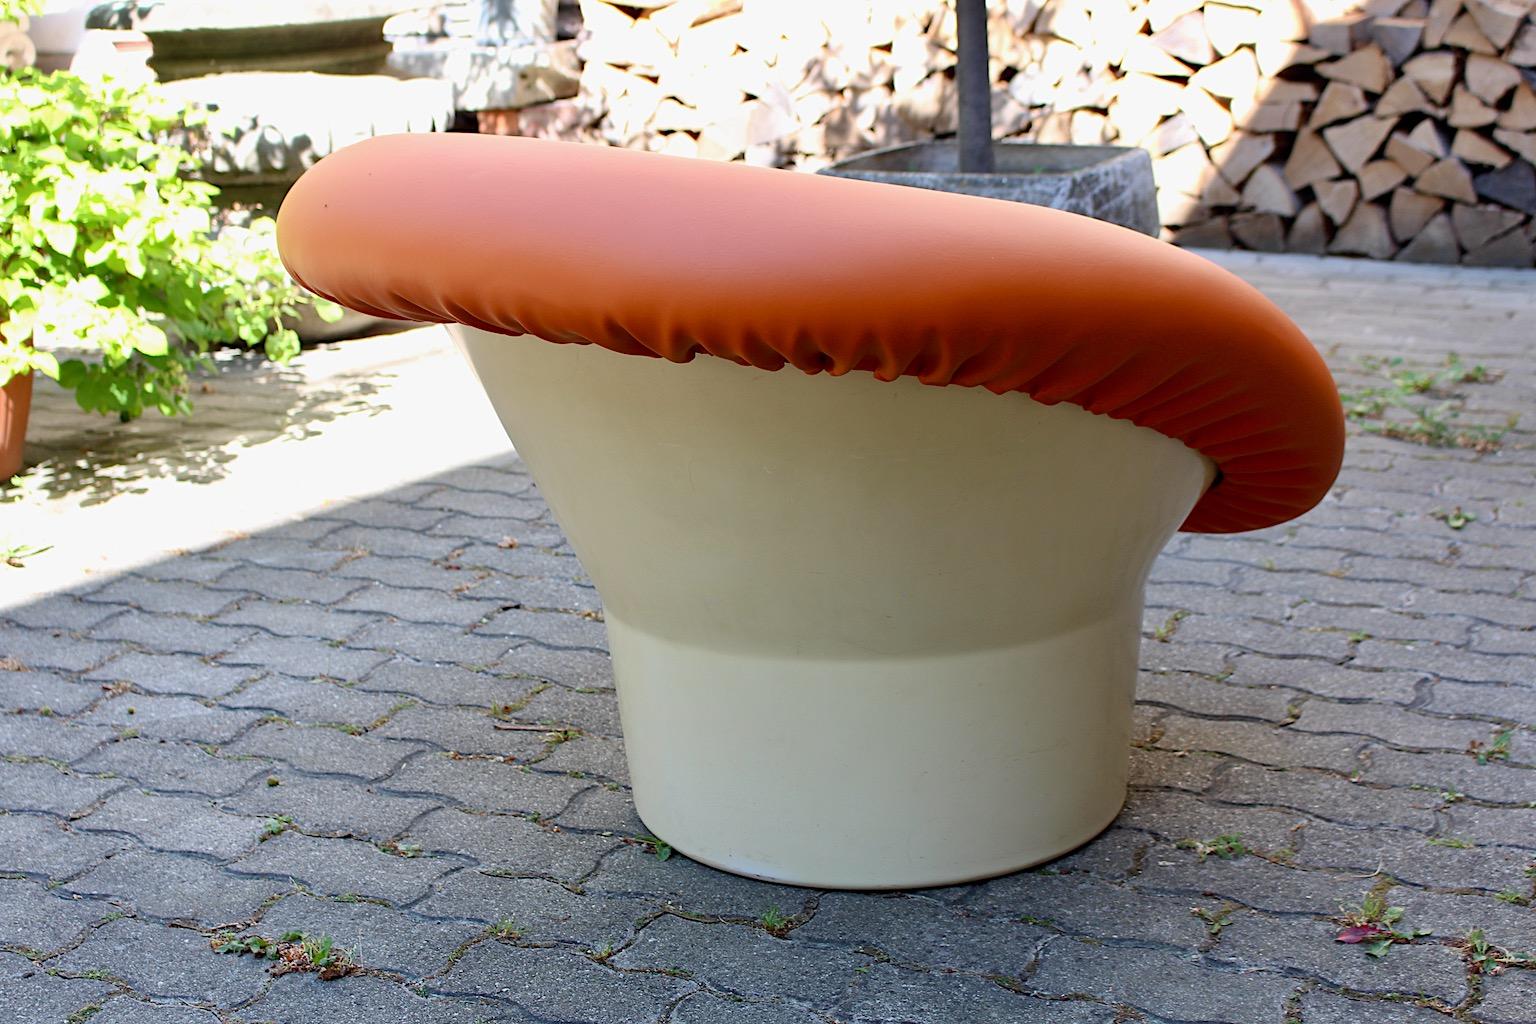 mushroom chairs